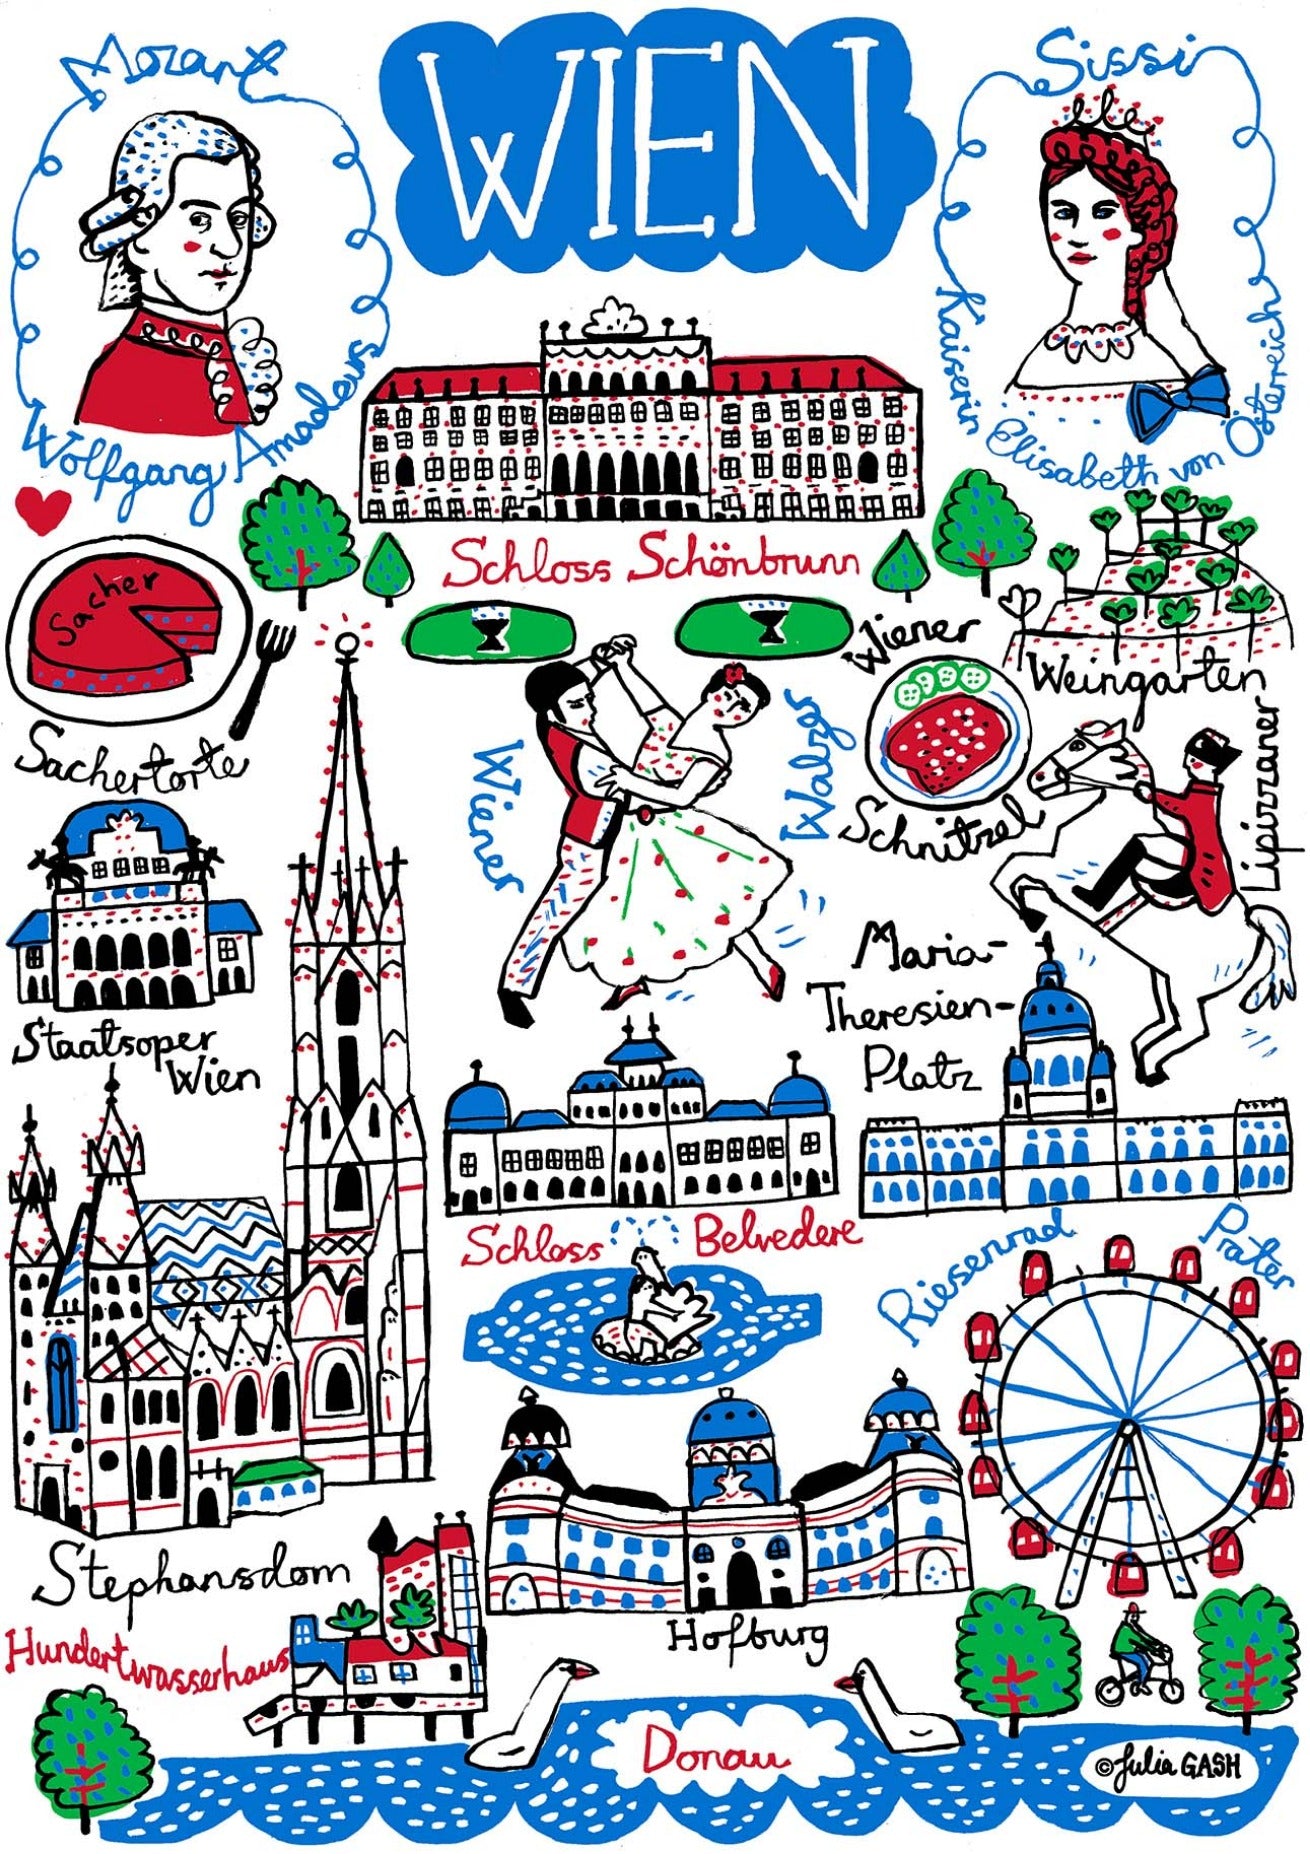 Wien - Vienna Travel Art Print by map artist Julia Gash featuring Mozart